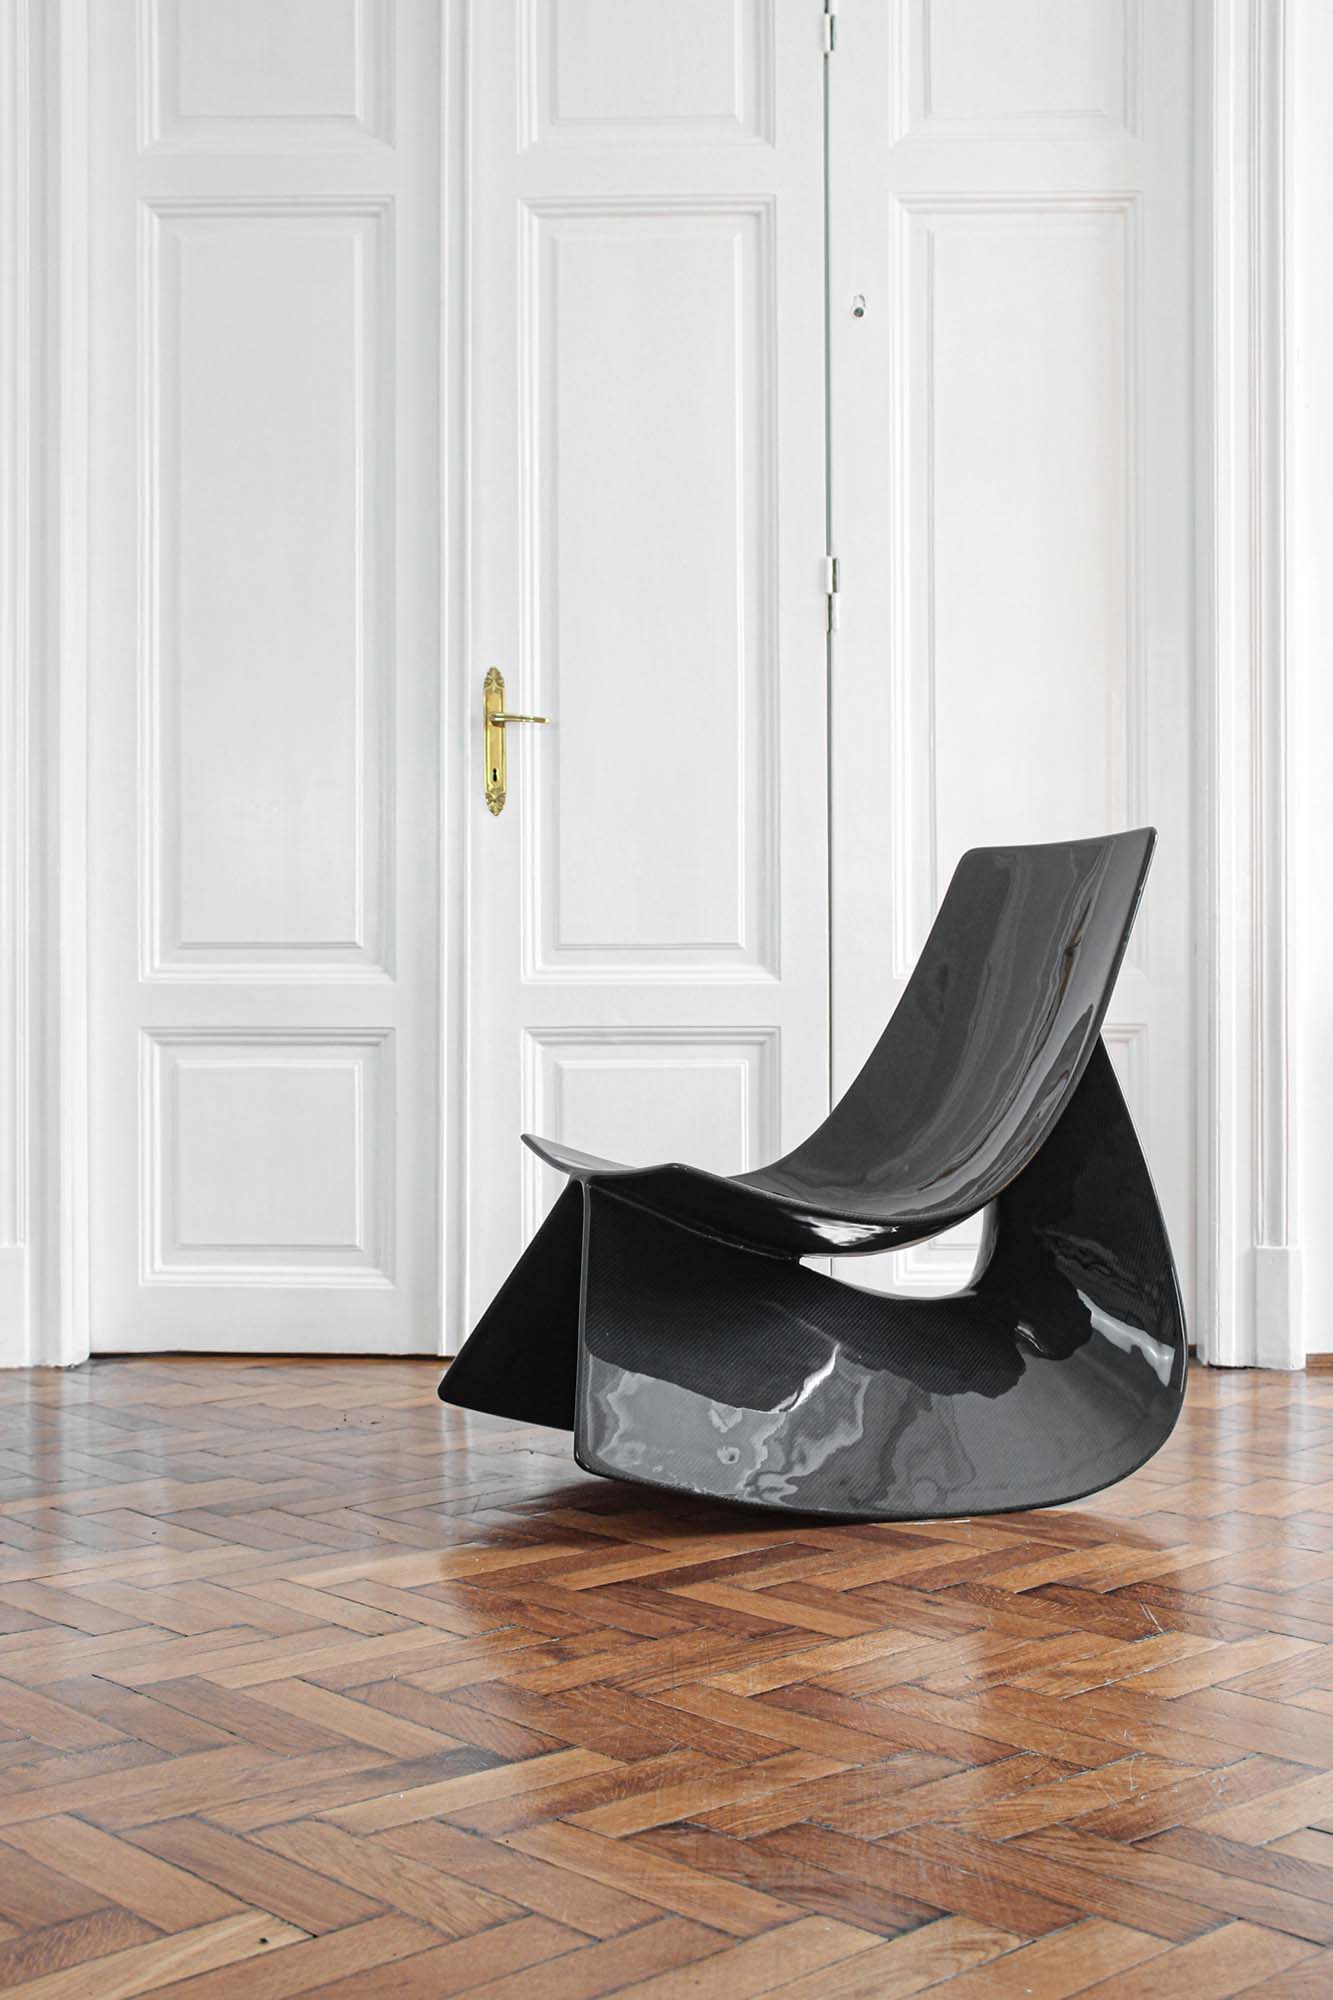 Kitin – carbon-fibre-reinforced composite rocking chair